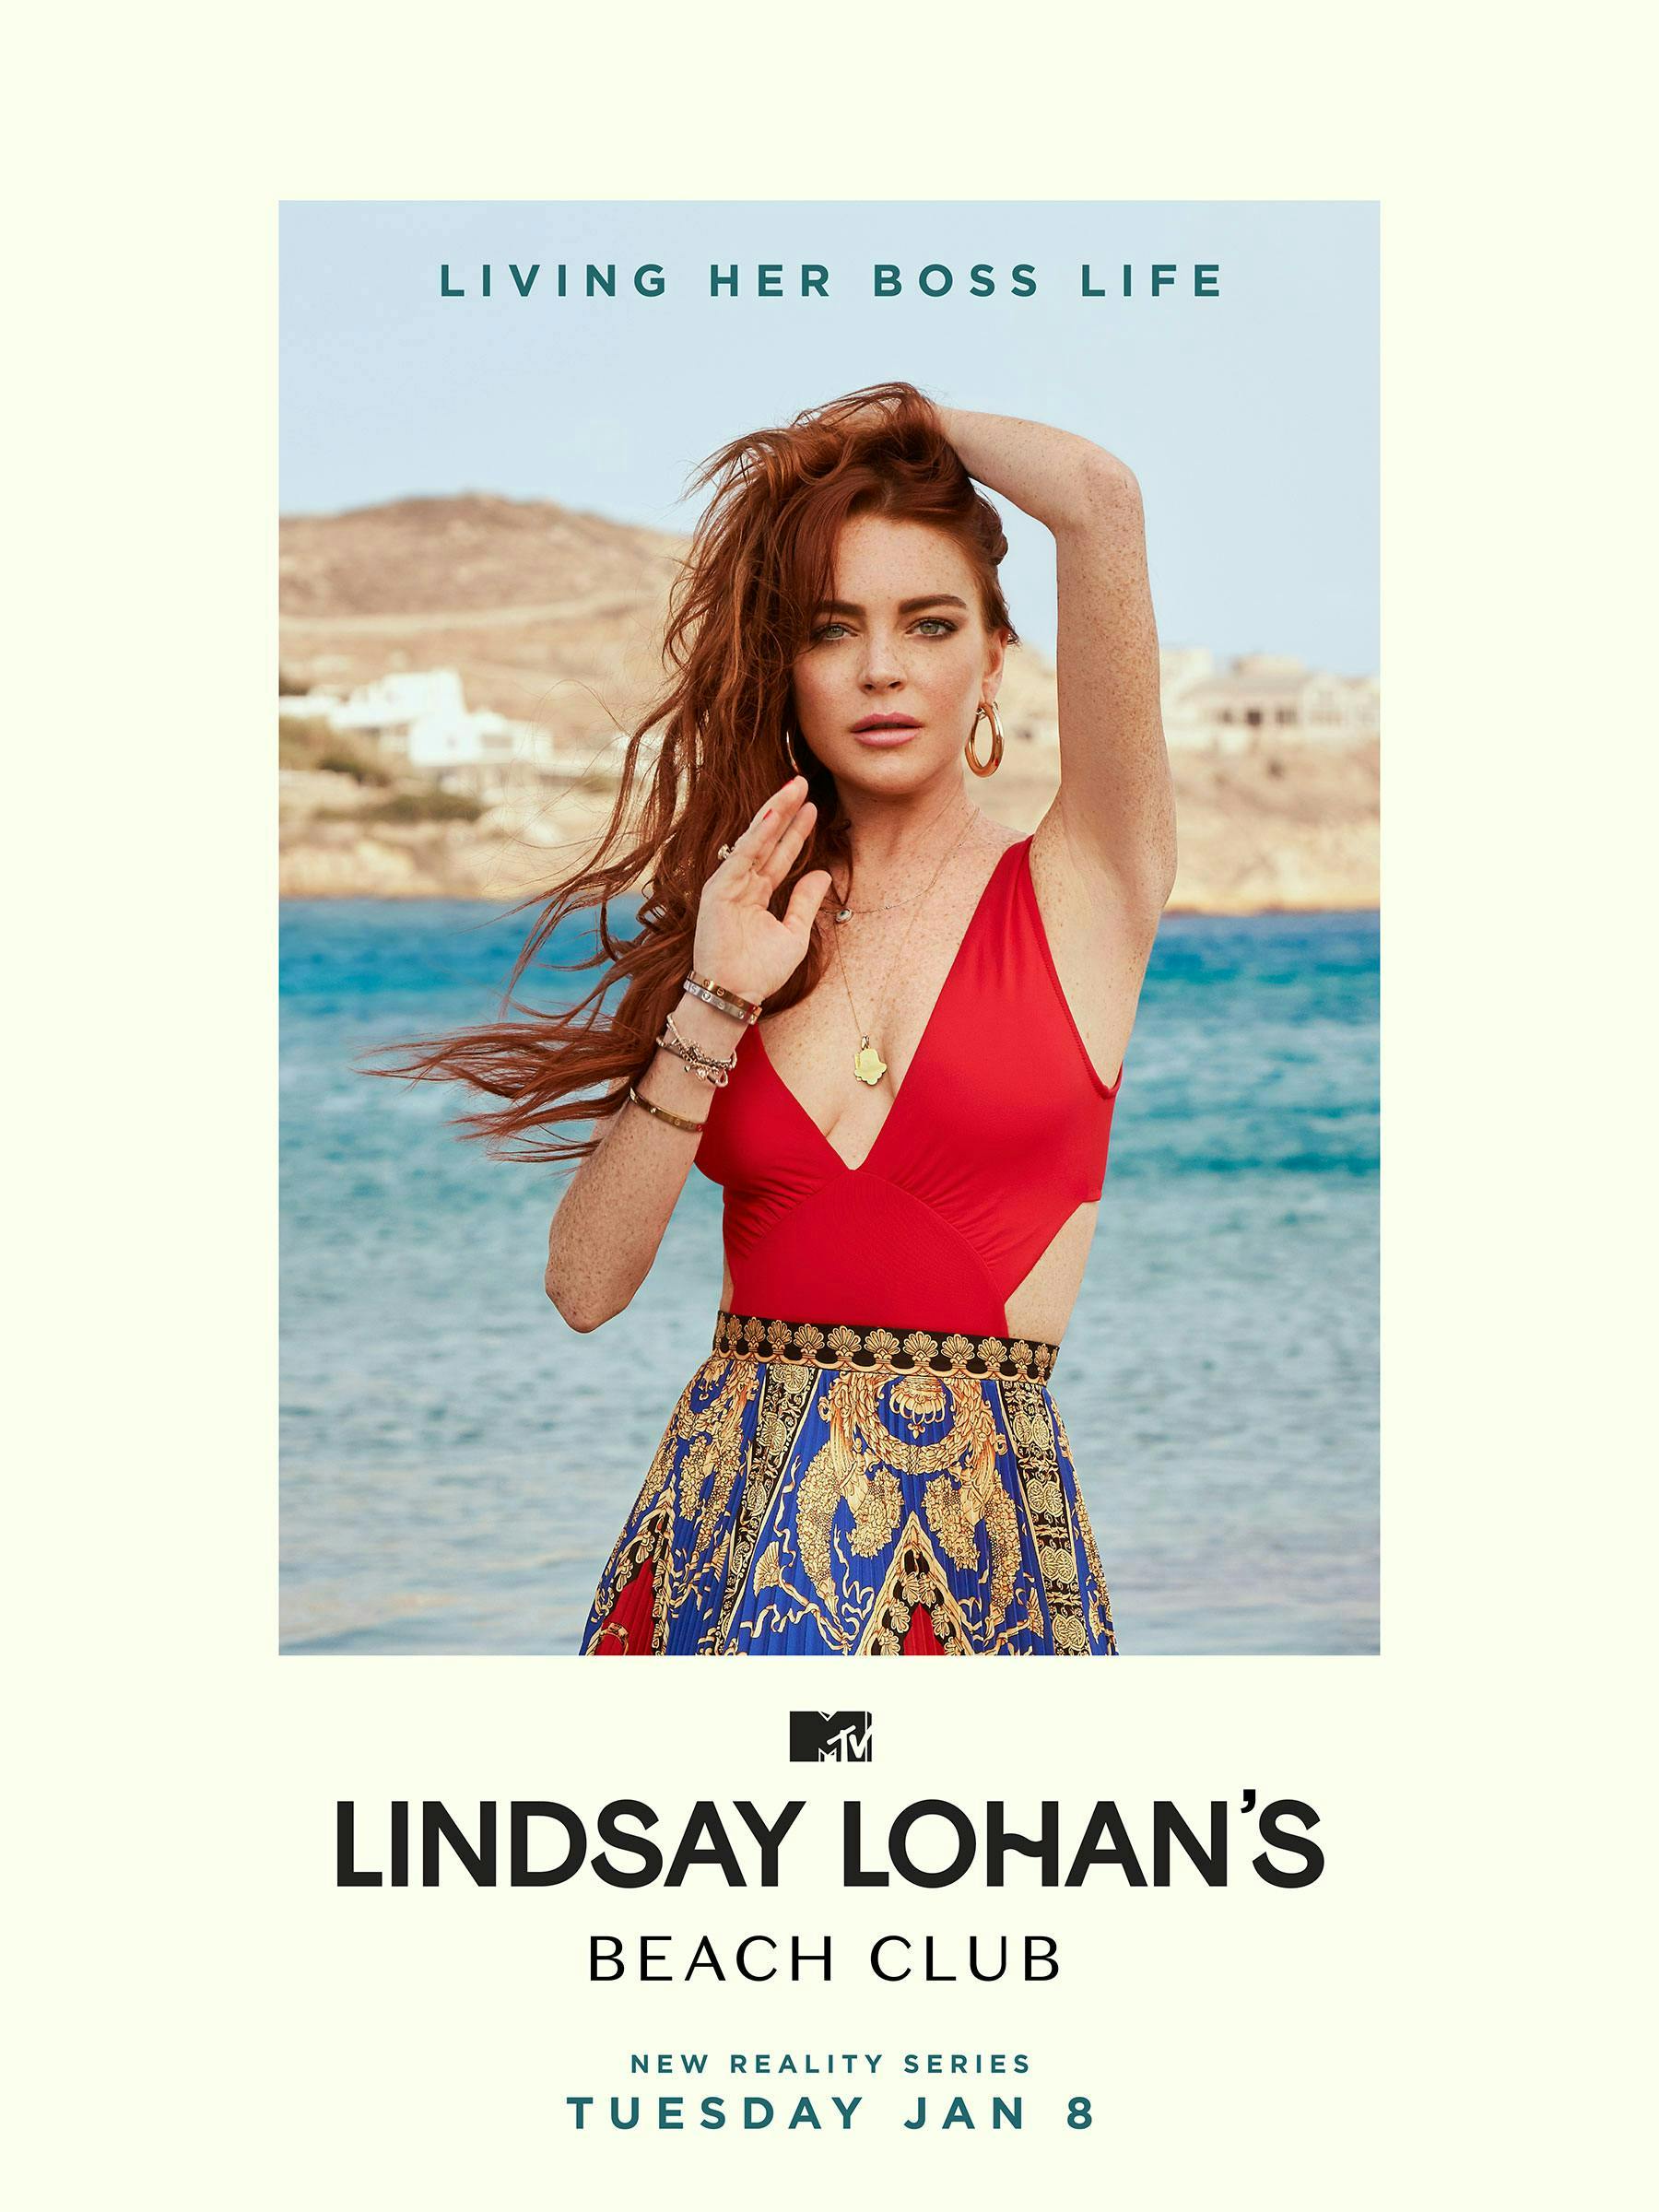 A poster for Lindsay Lohan's Beach Club MTV show. 